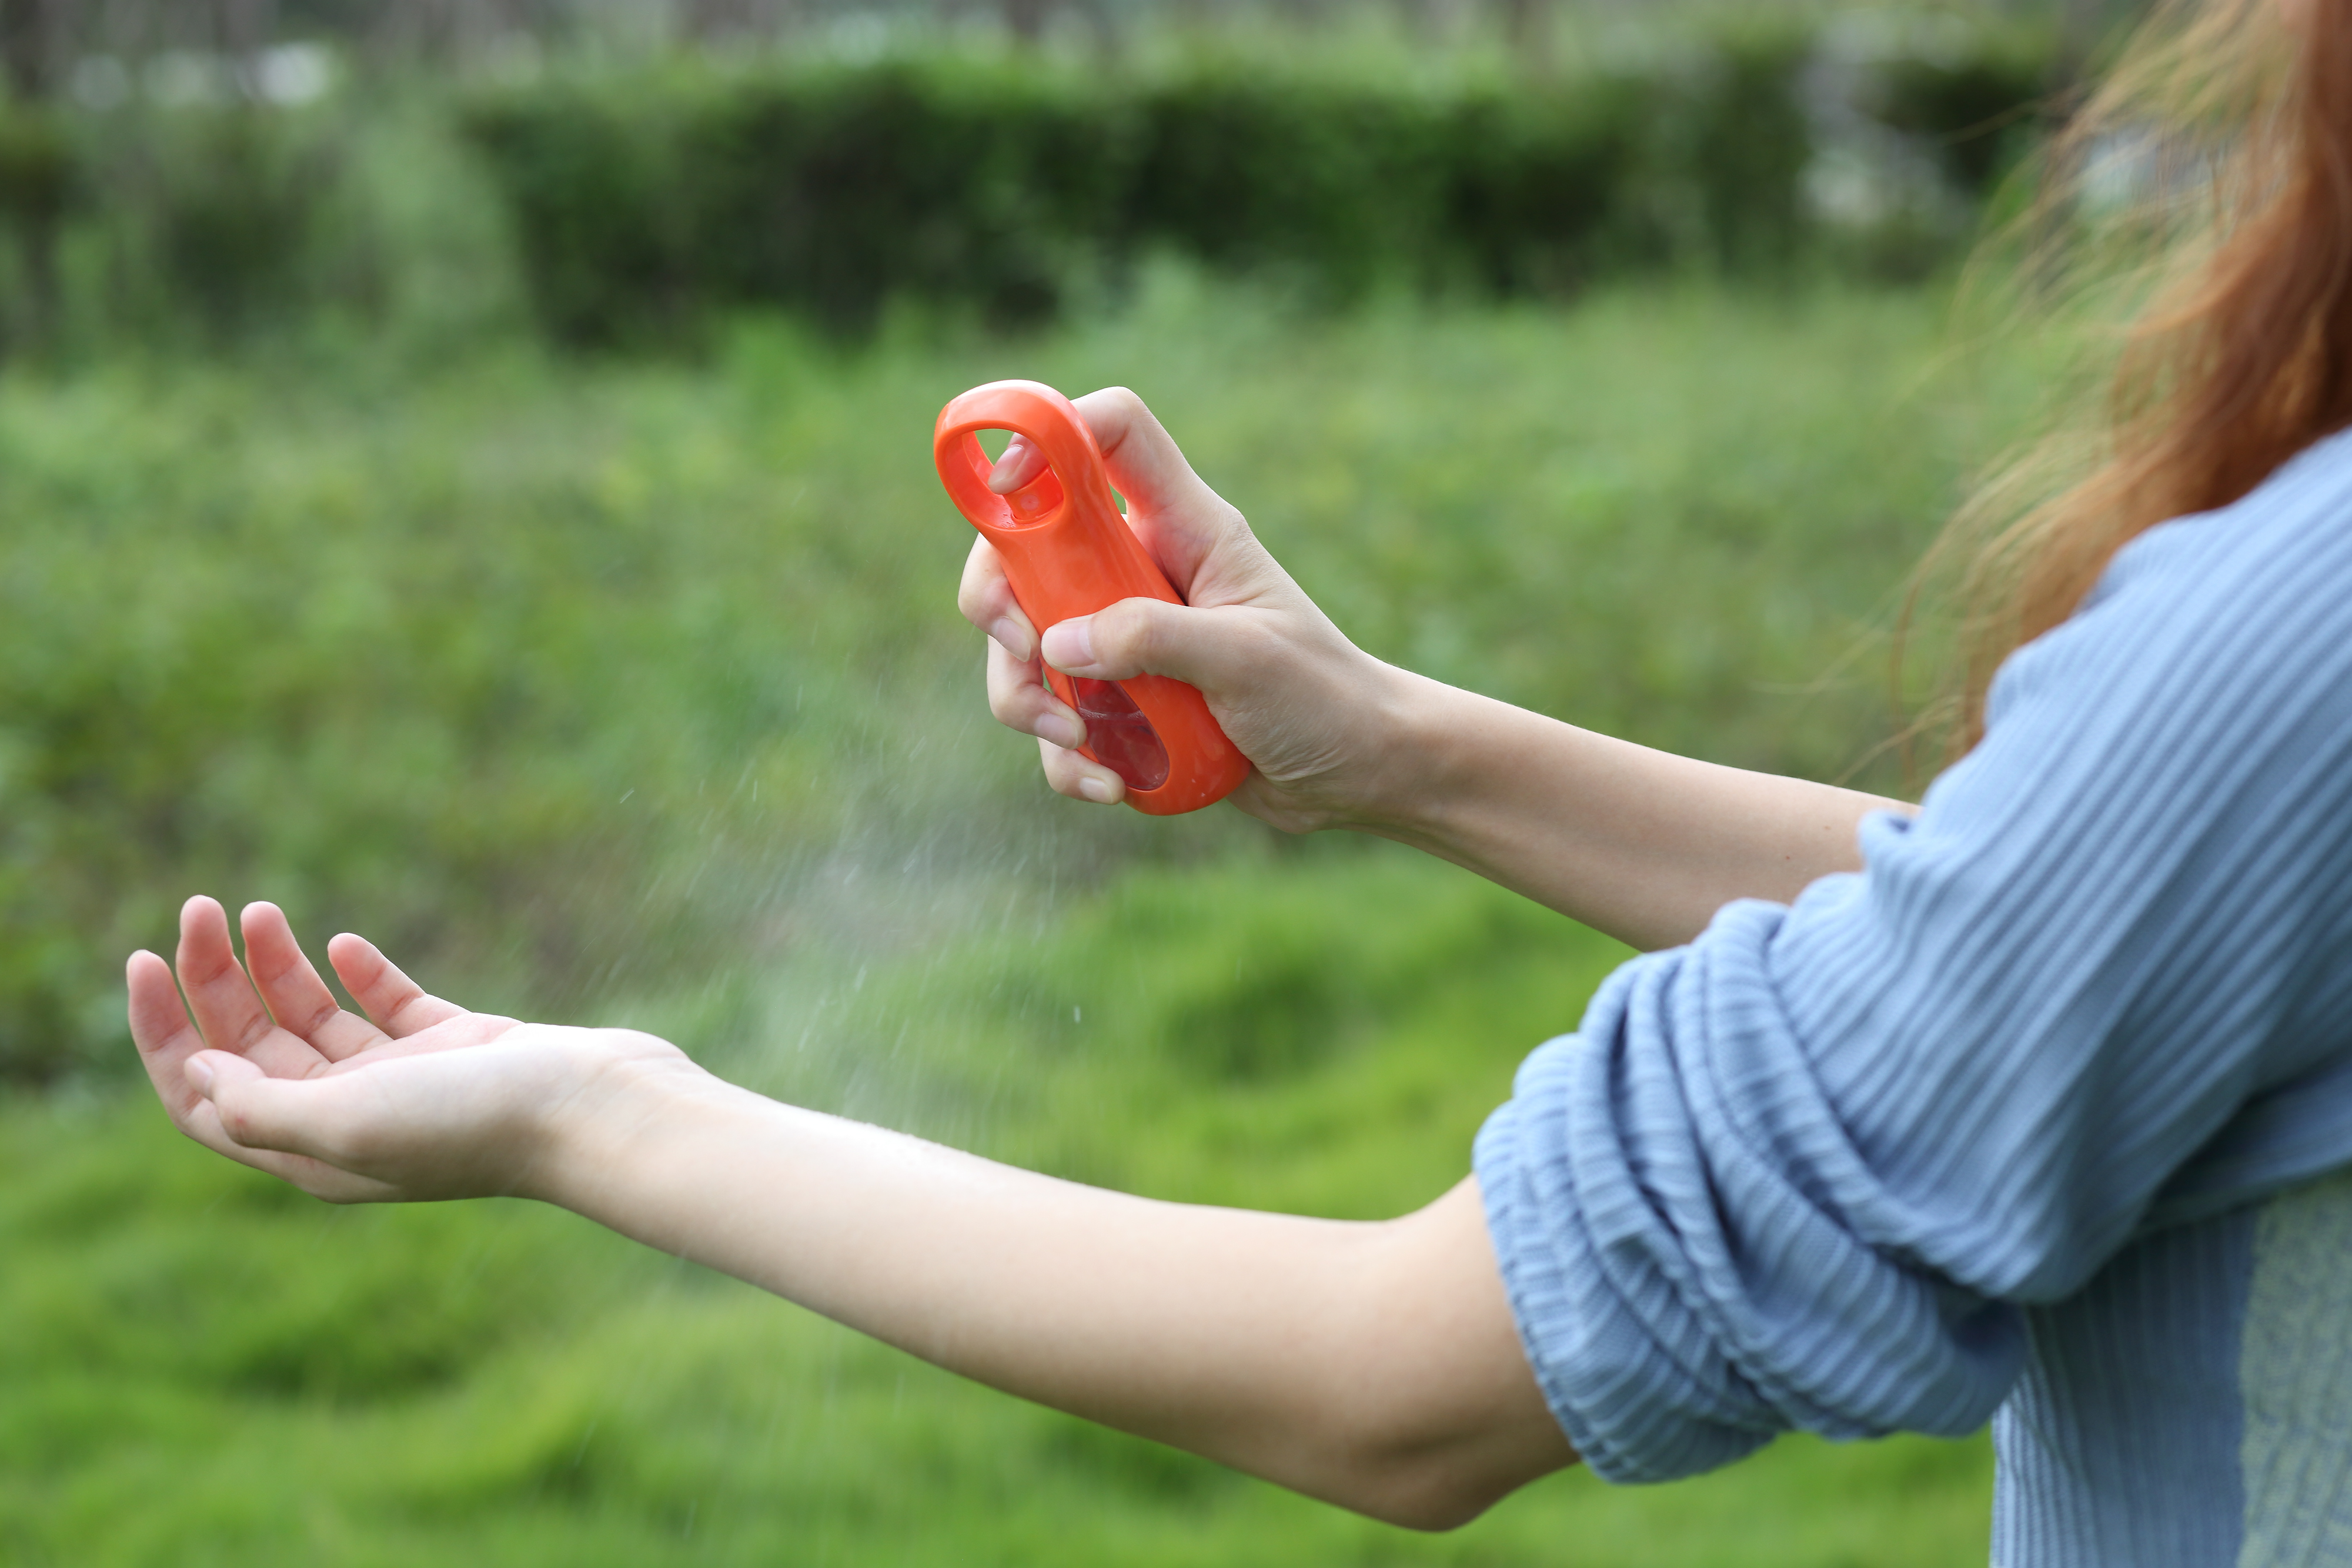 Mosquito repellent spray bottle